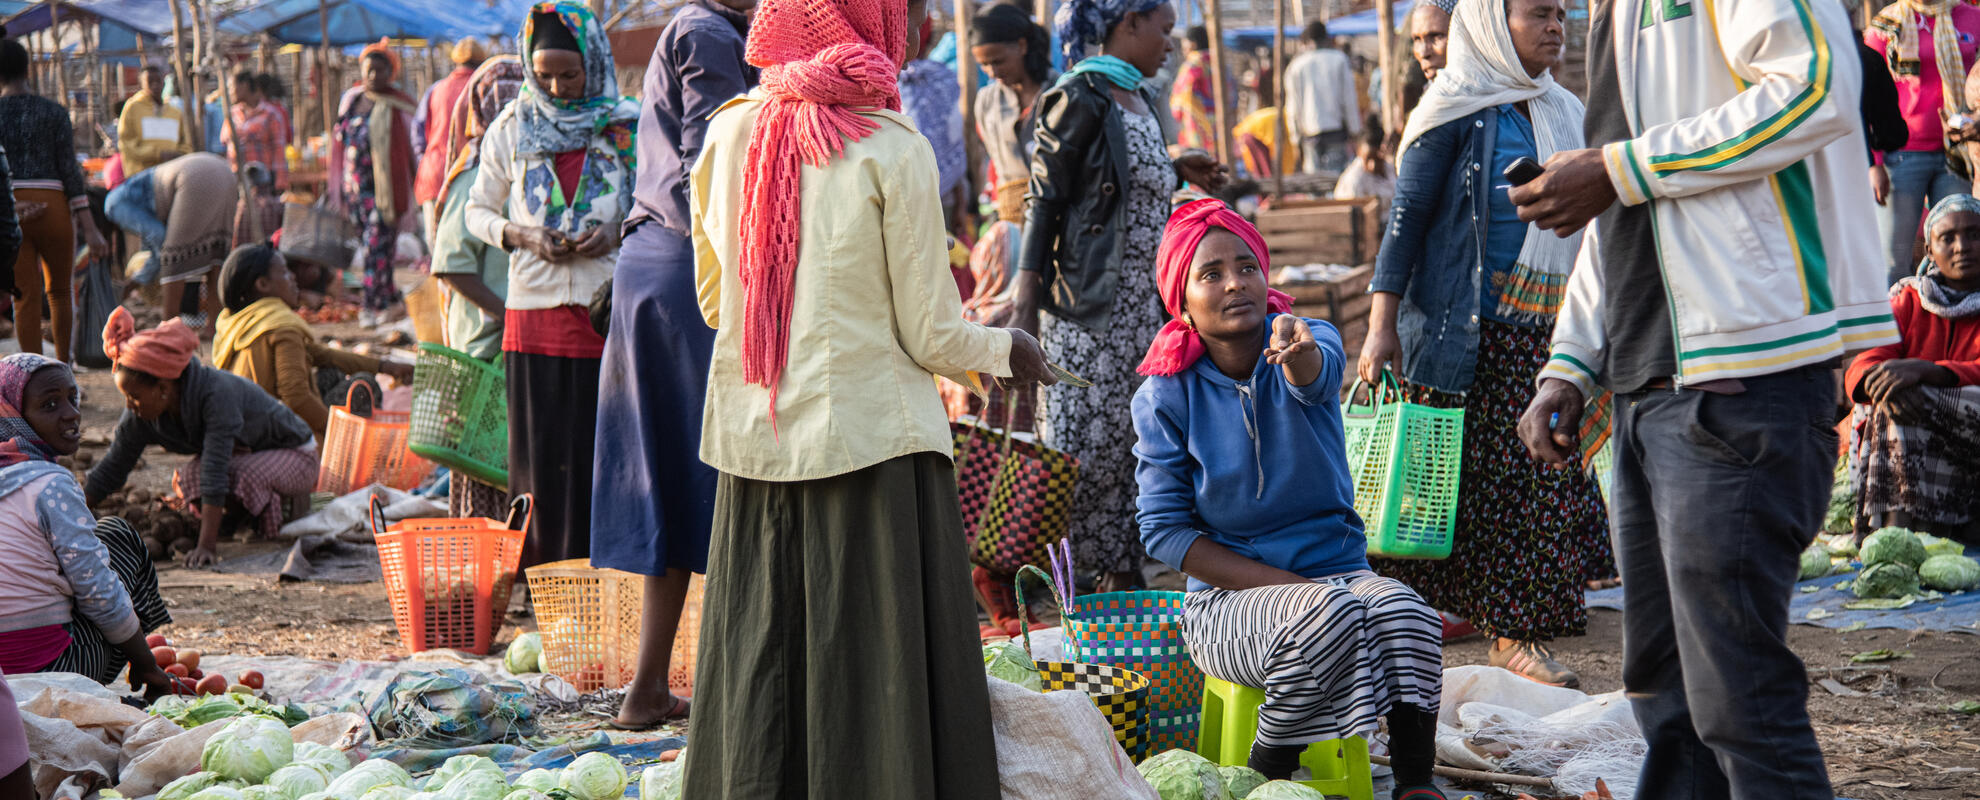 Market in Doyogena District, Ethiopia (ILRI / Georgina Smith)